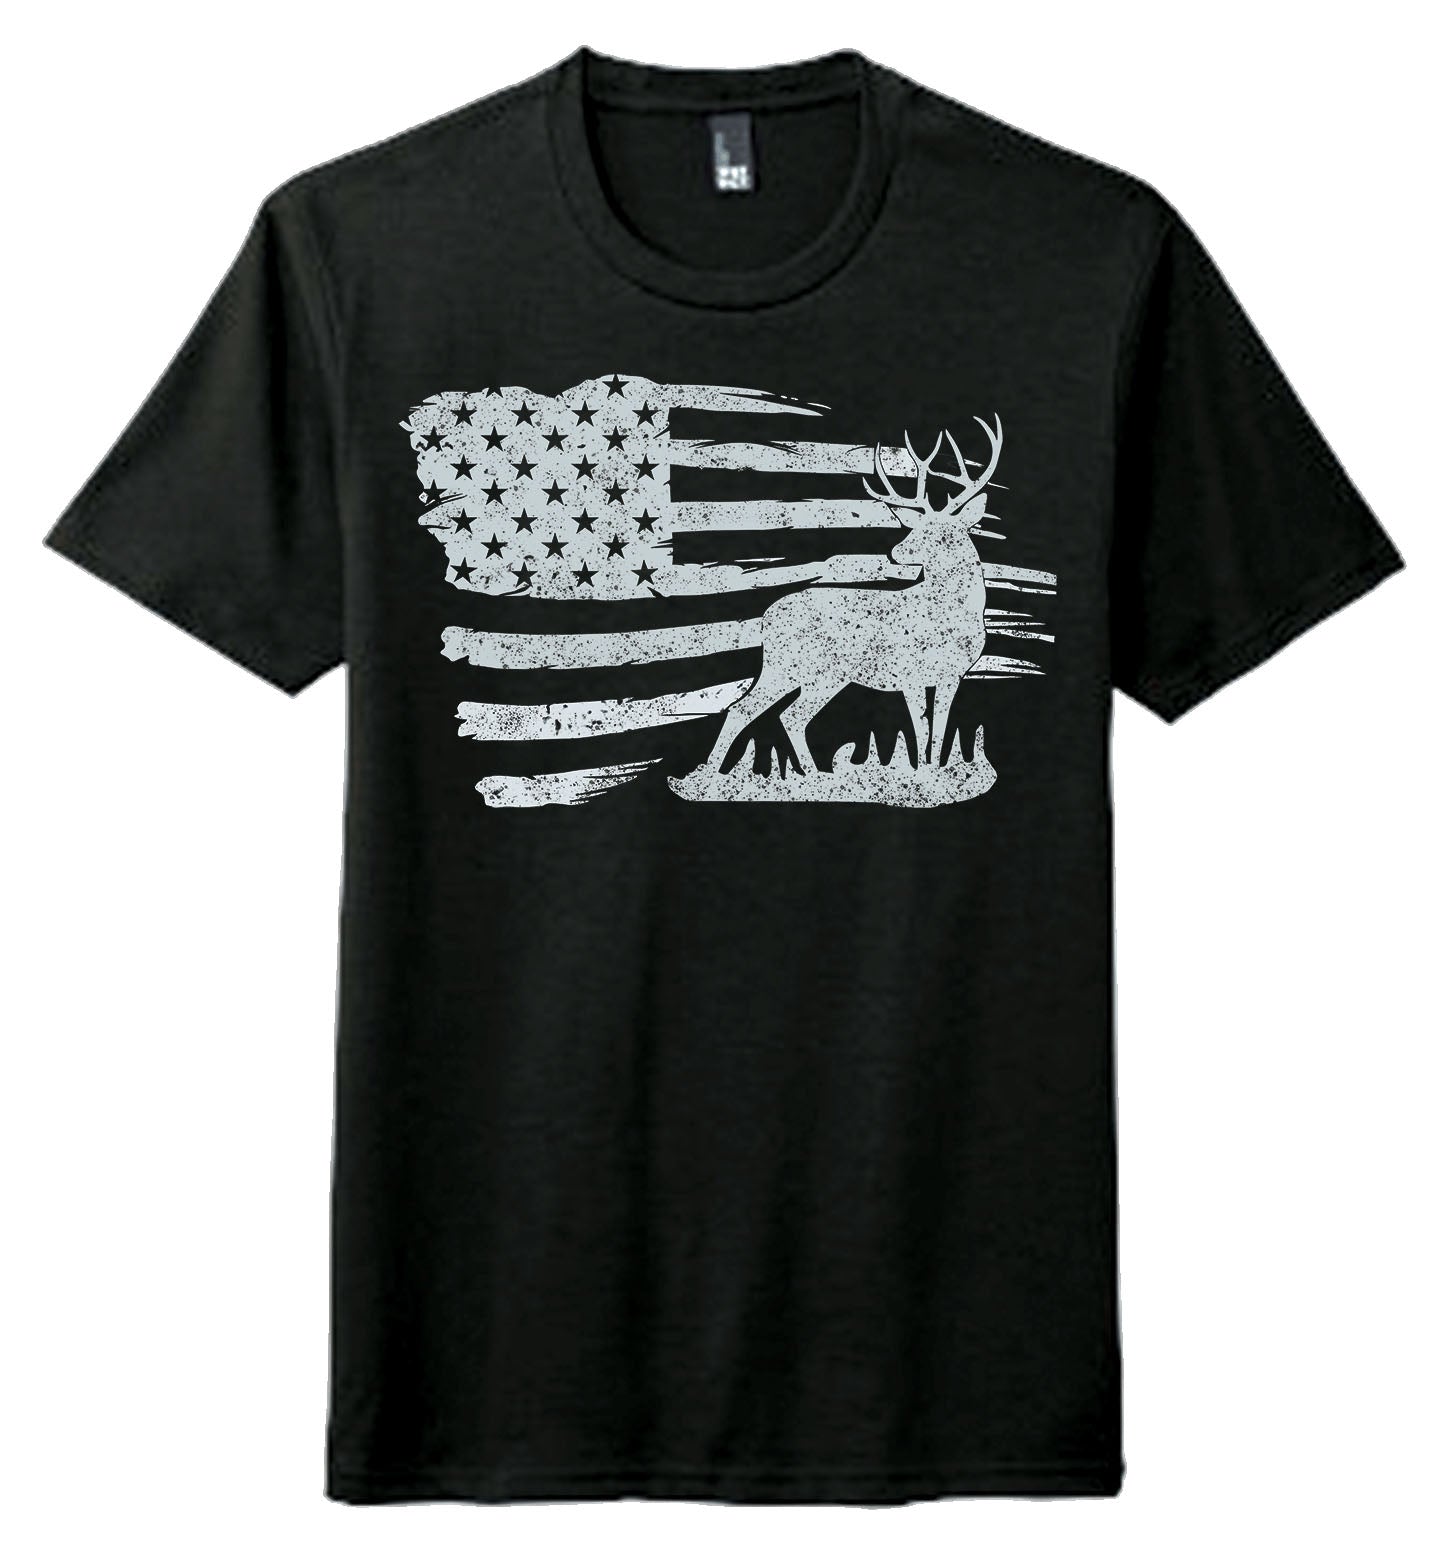 Men's Deer Print Tee, Men's T-Shirt, Deer and Flag Print T-Shirt, Comfy Men's T-Shirt